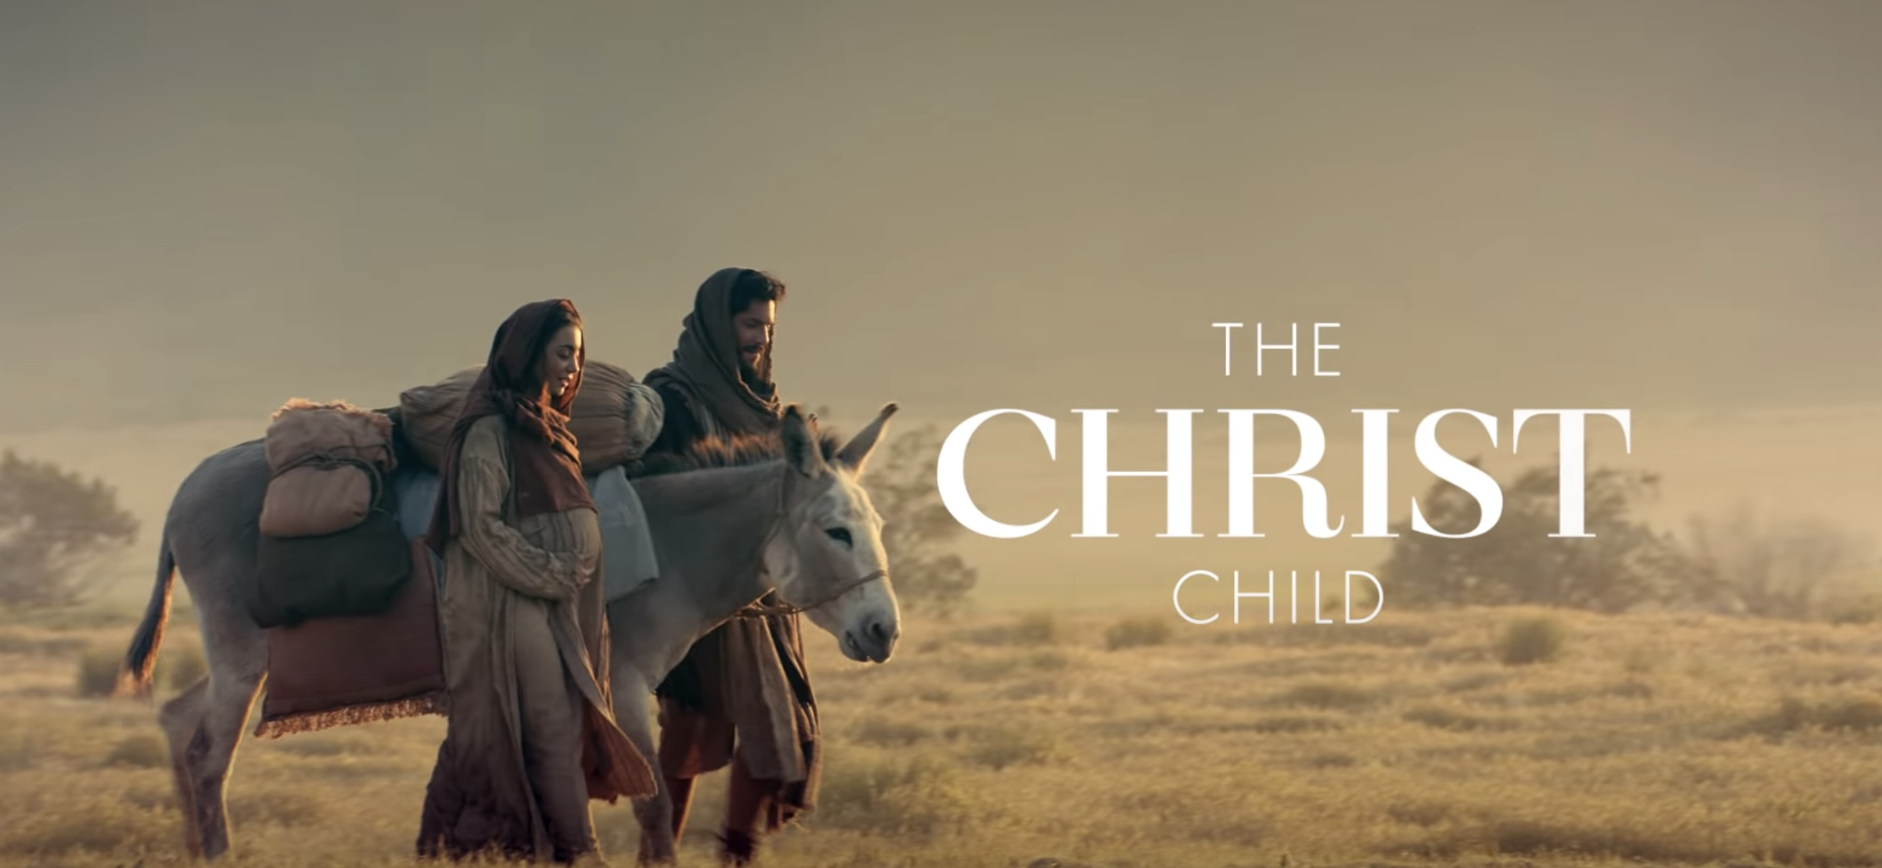 the Christ child